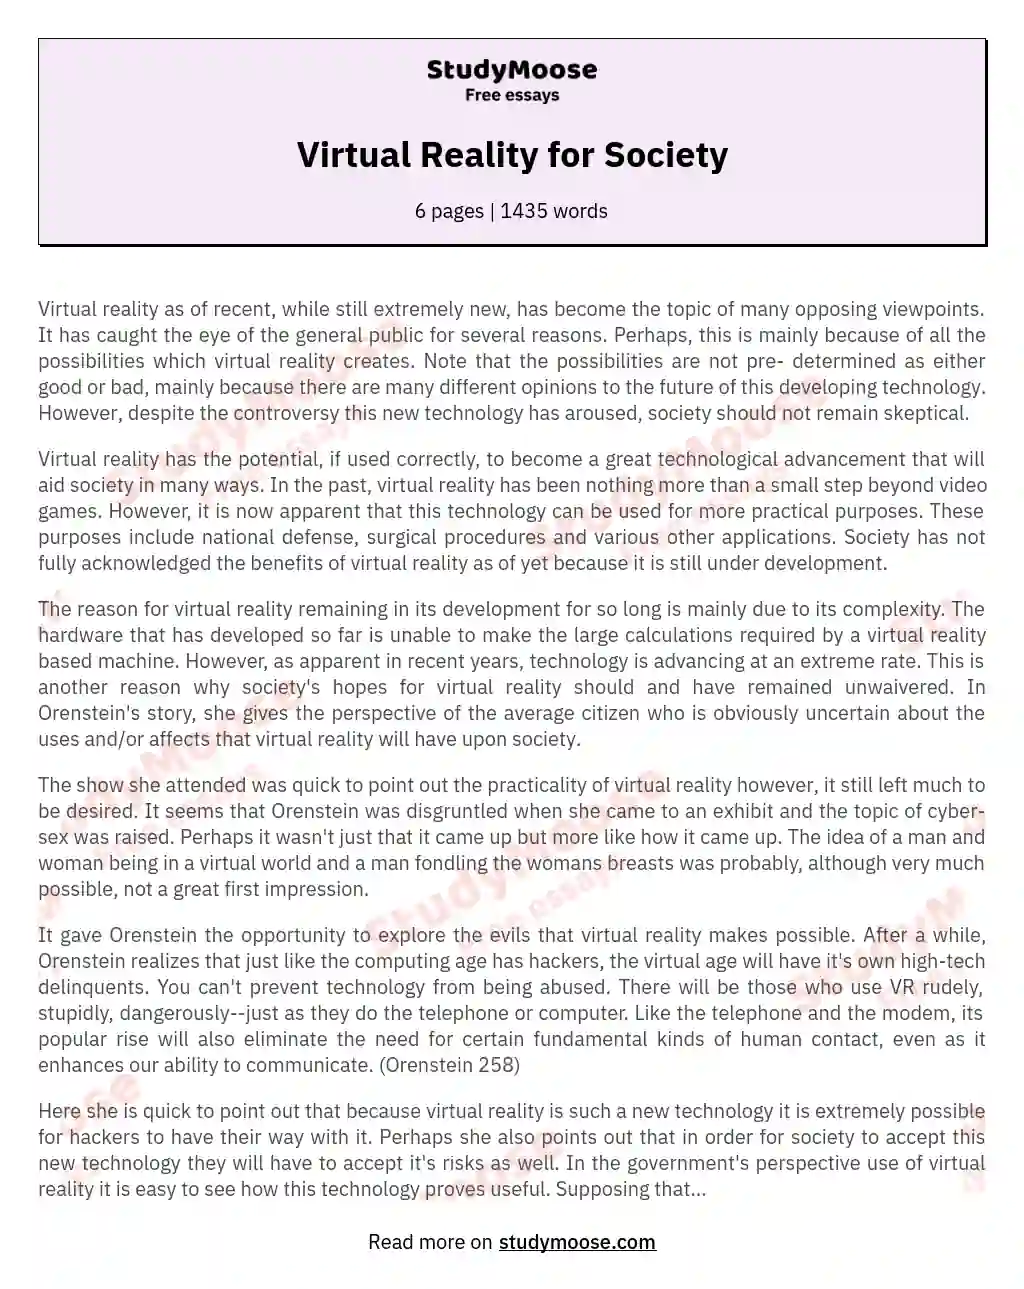 virtual reality essay 200 words